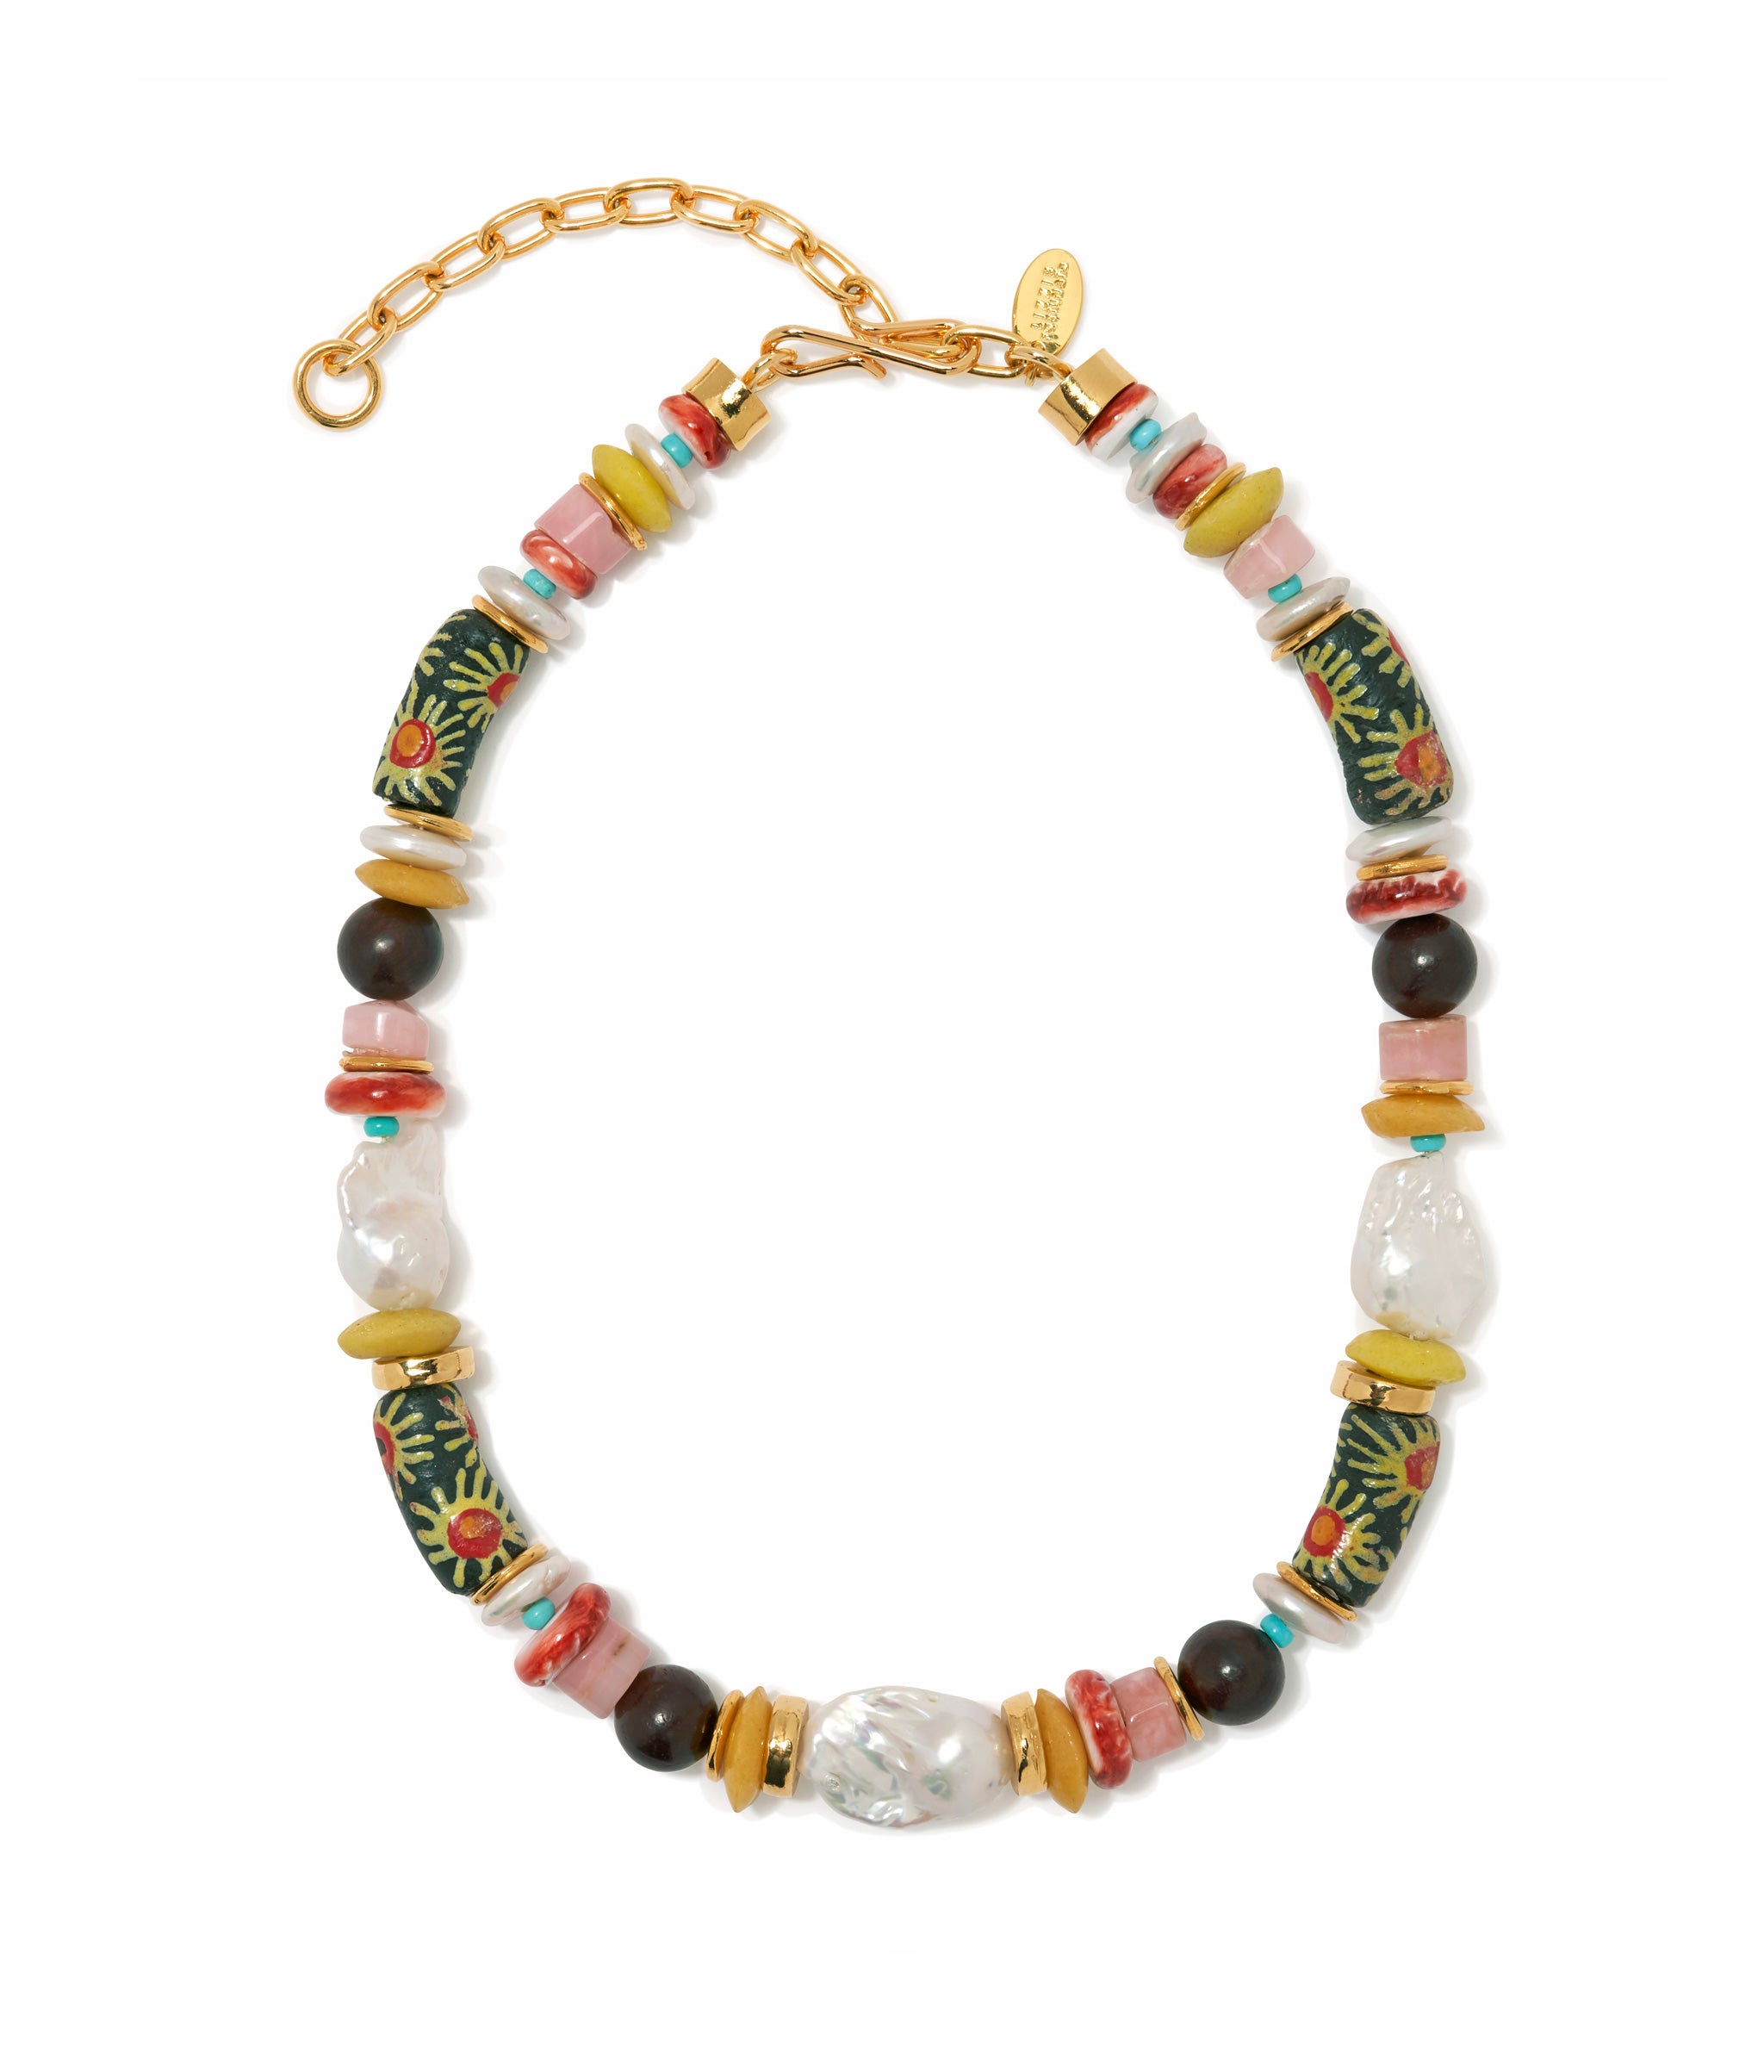 Souvenir Necklace in Tropic